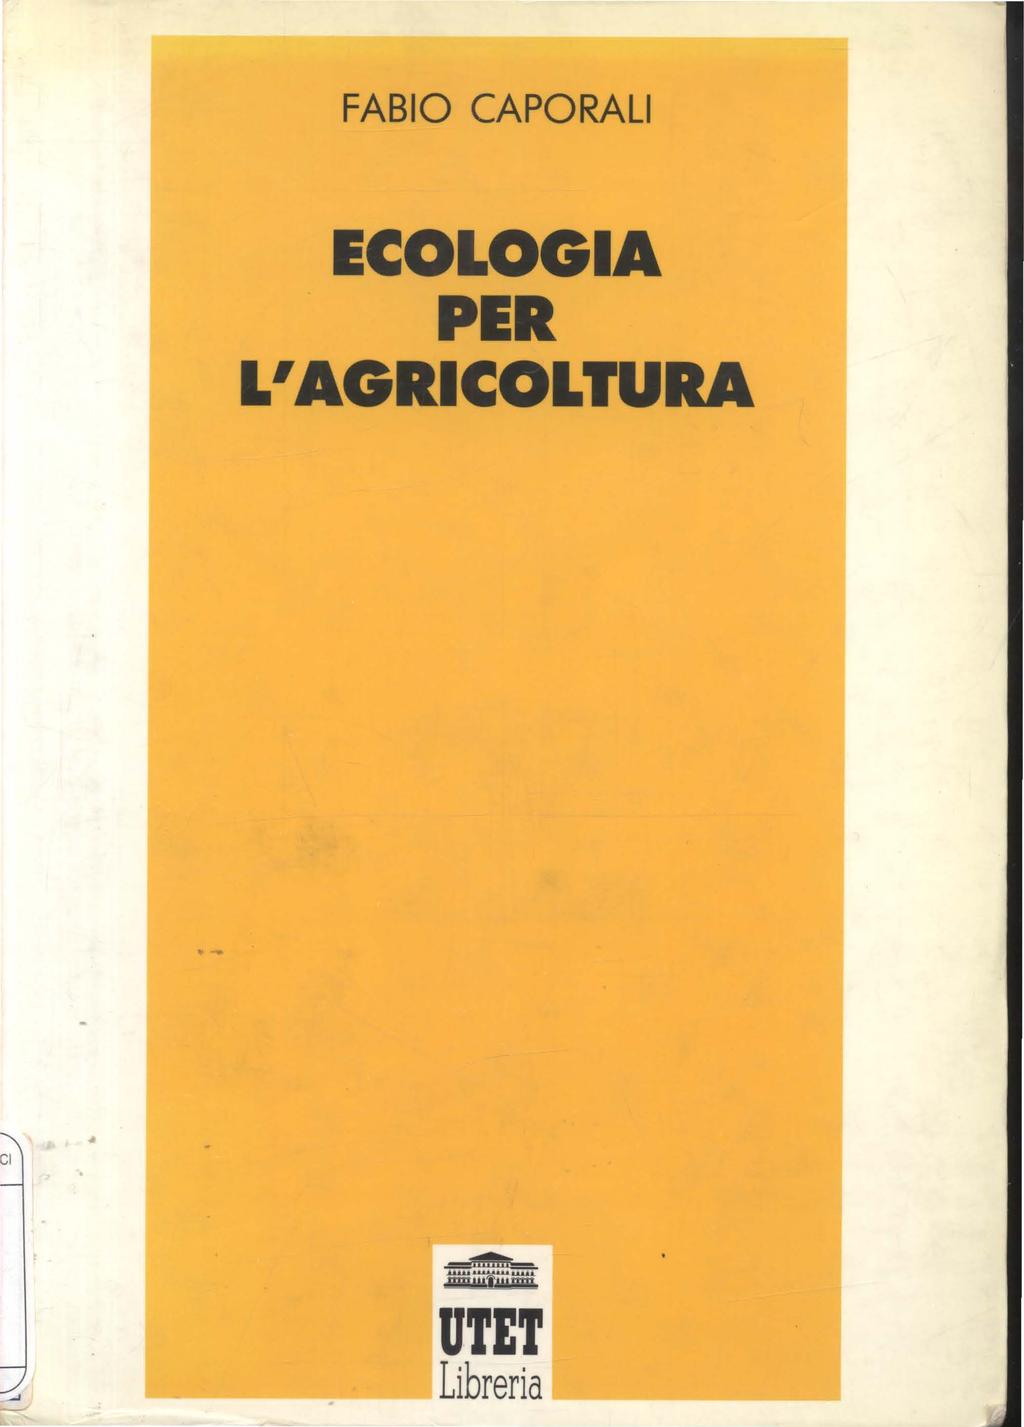 FABIO CAPORALI ECOLOGIA PER L'AGRICOLTURA l.u.